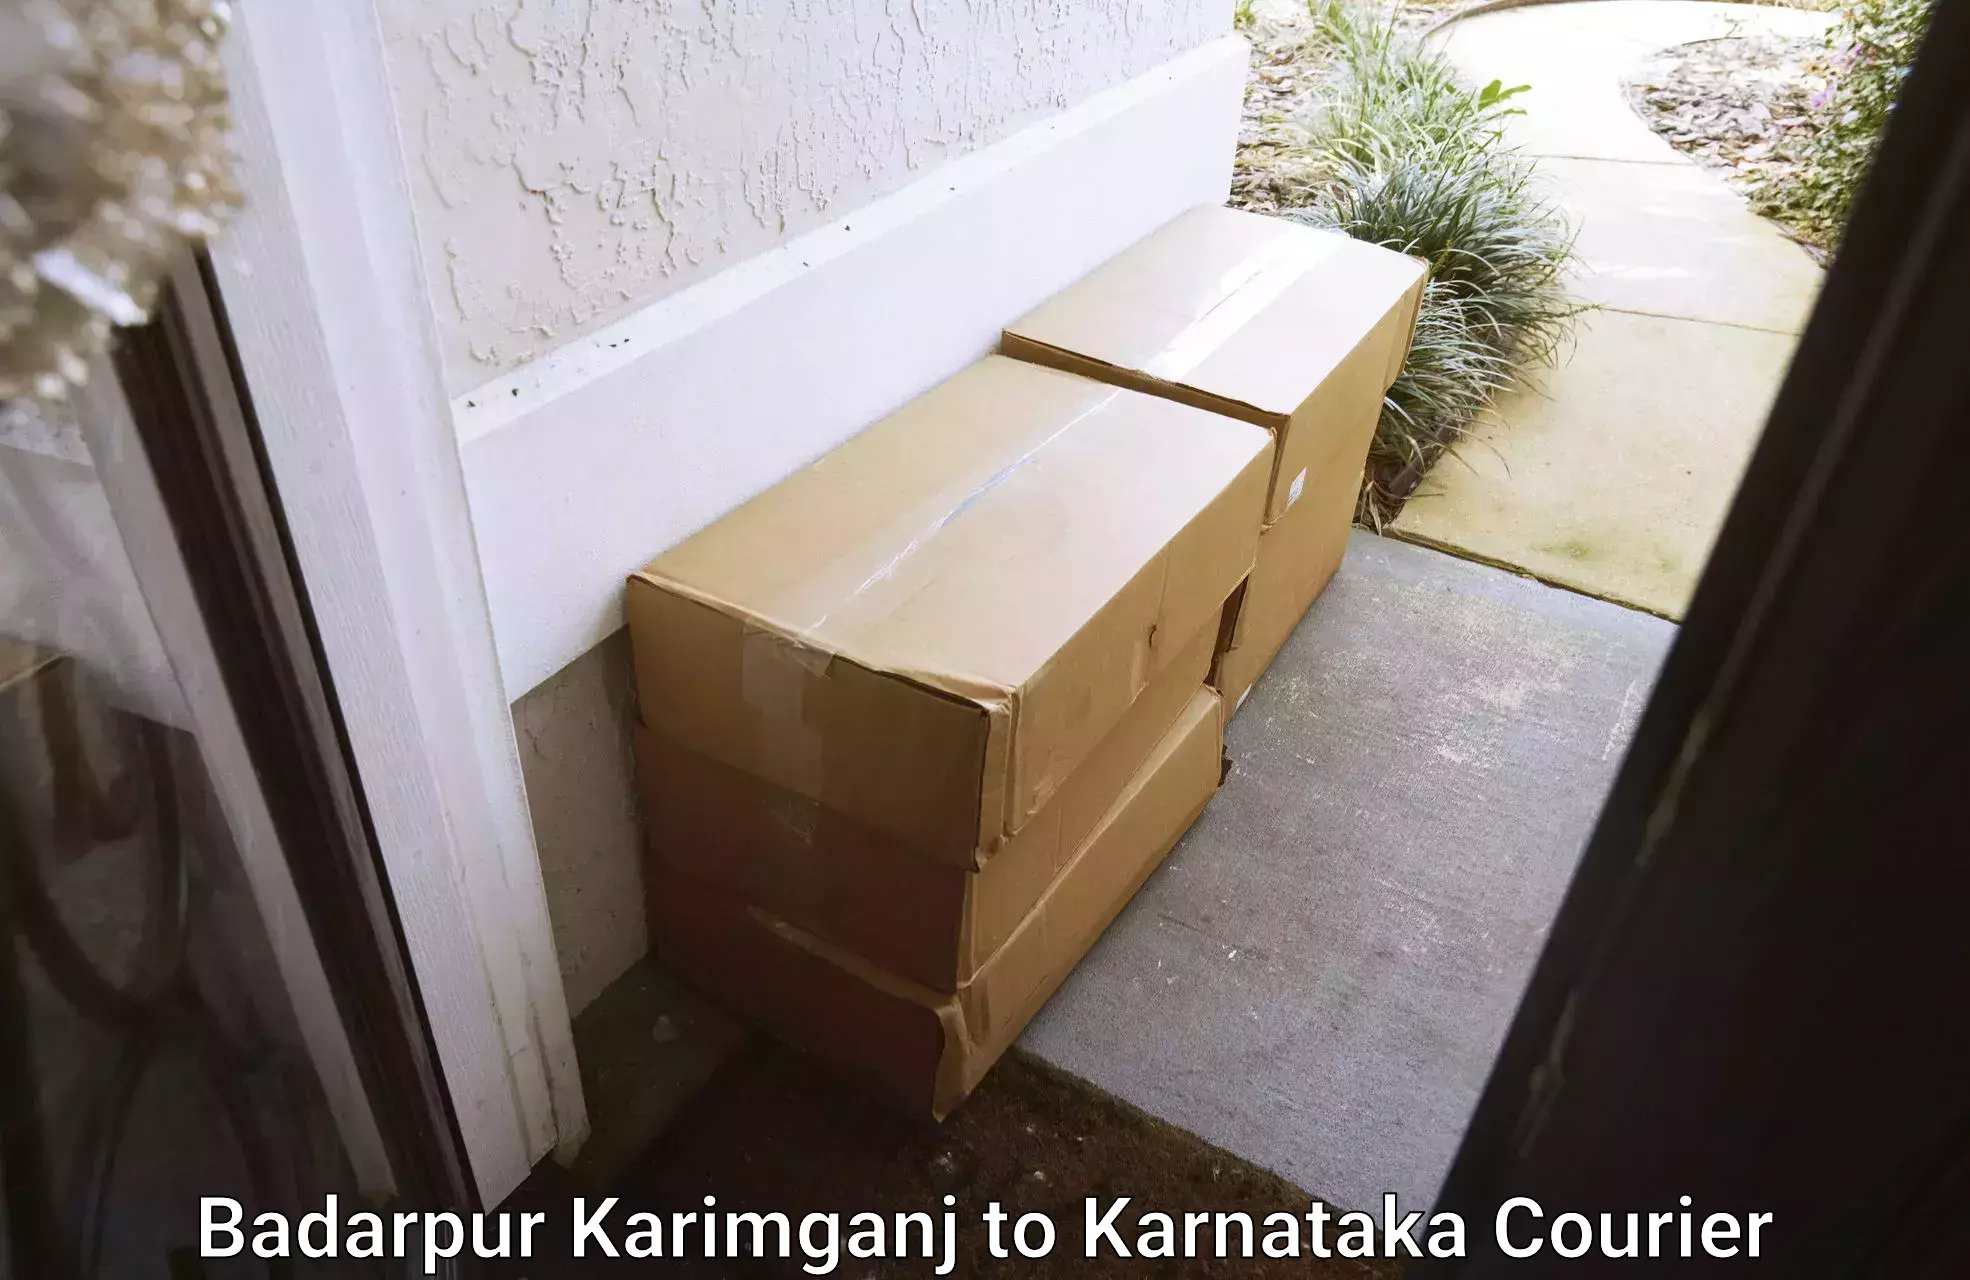 Next day courier Badarpur Karimganj to Koratagere